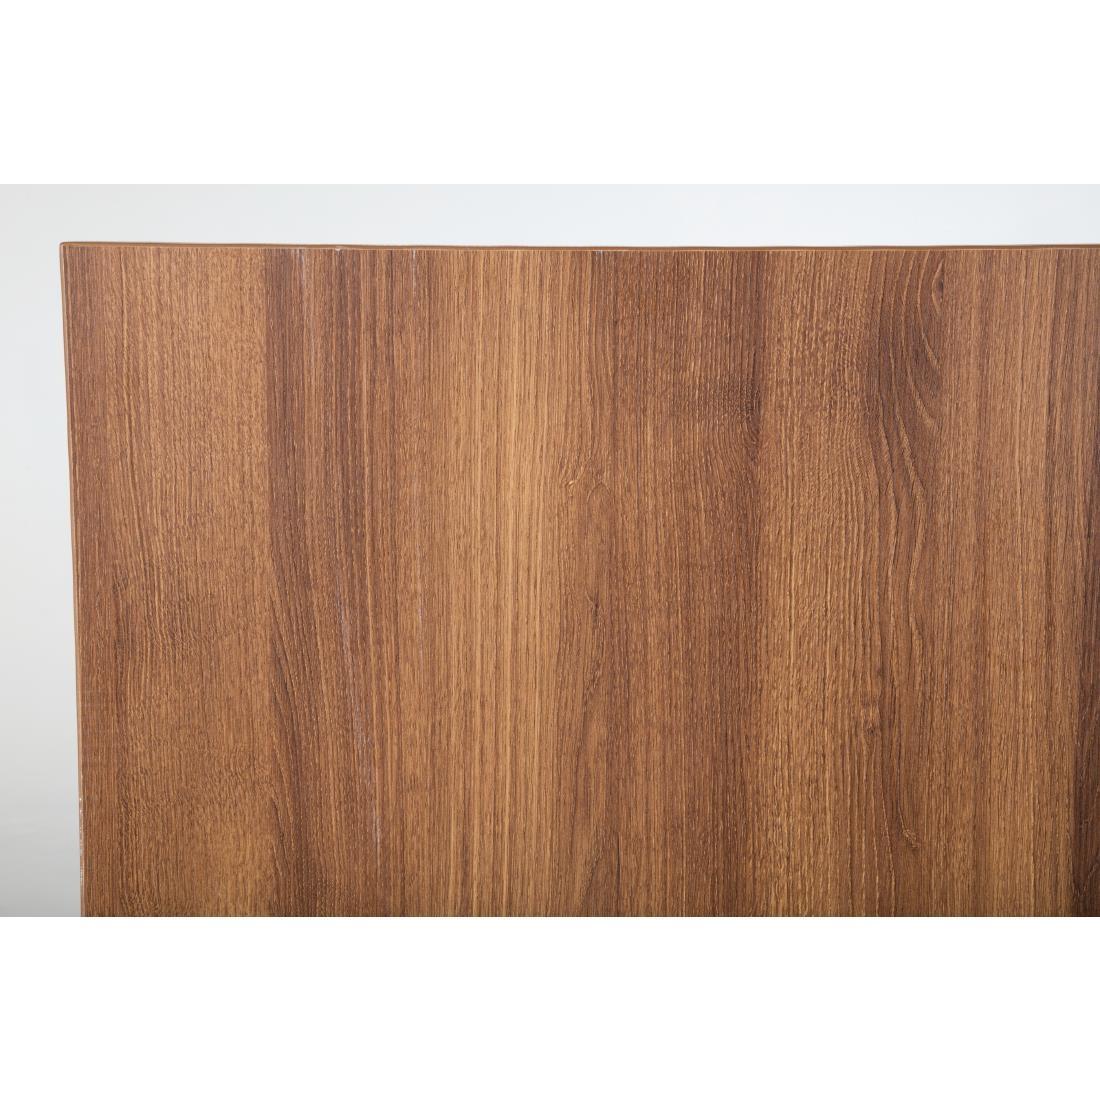 Bolero Pre-drilled Rectangular Table Top Rustic Oak 1100(W) x 700(D)mm - DT442  - 6